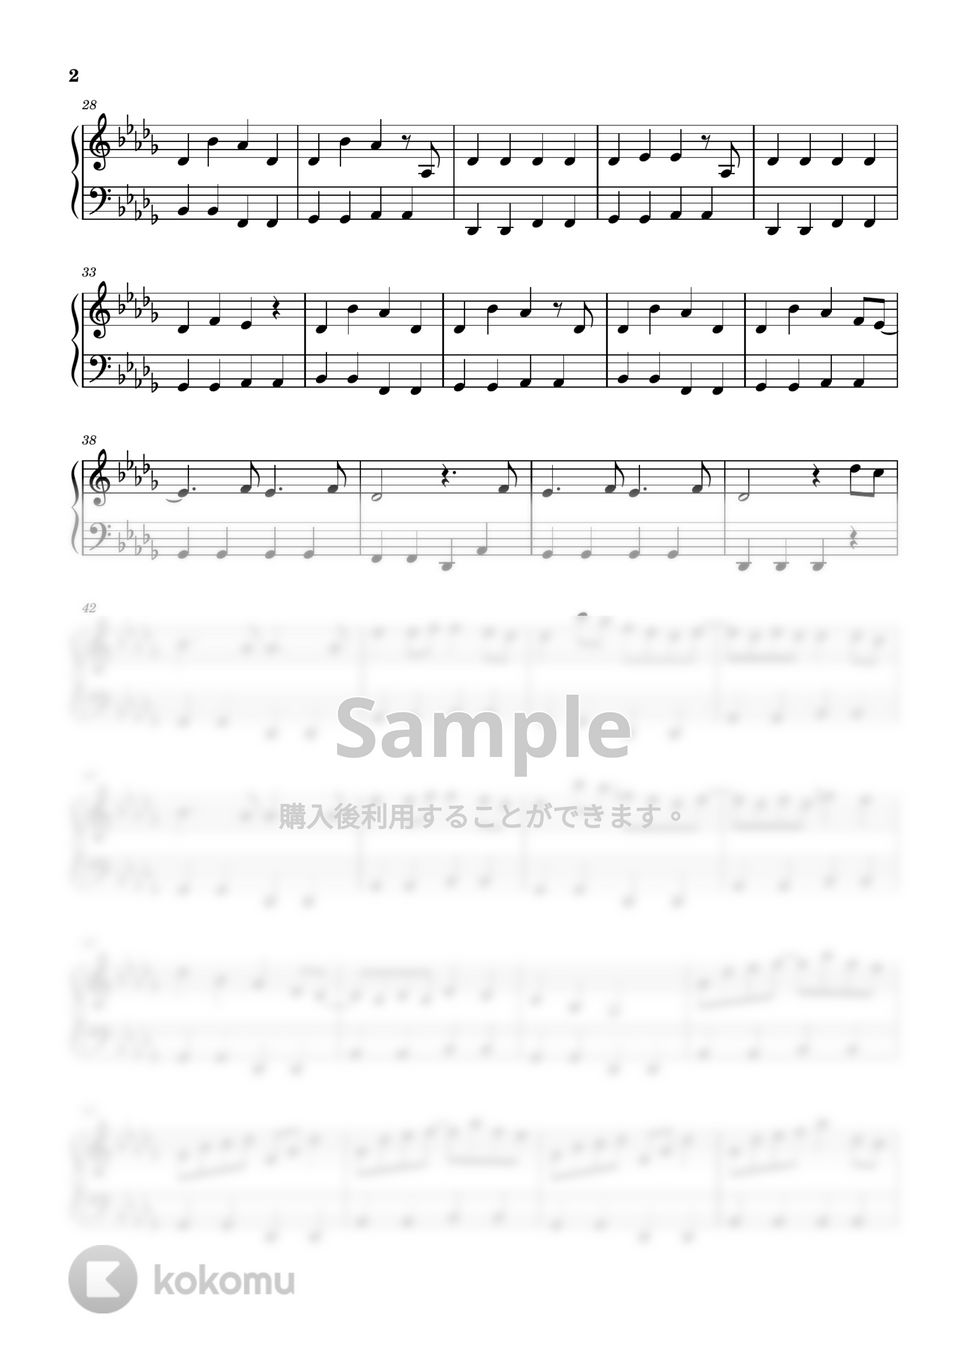 Orangestar - 回る空うさぎ (ピアノ / 初級 / Orangestar / ボカロ) by 簡単ボカロピアノch ニキ